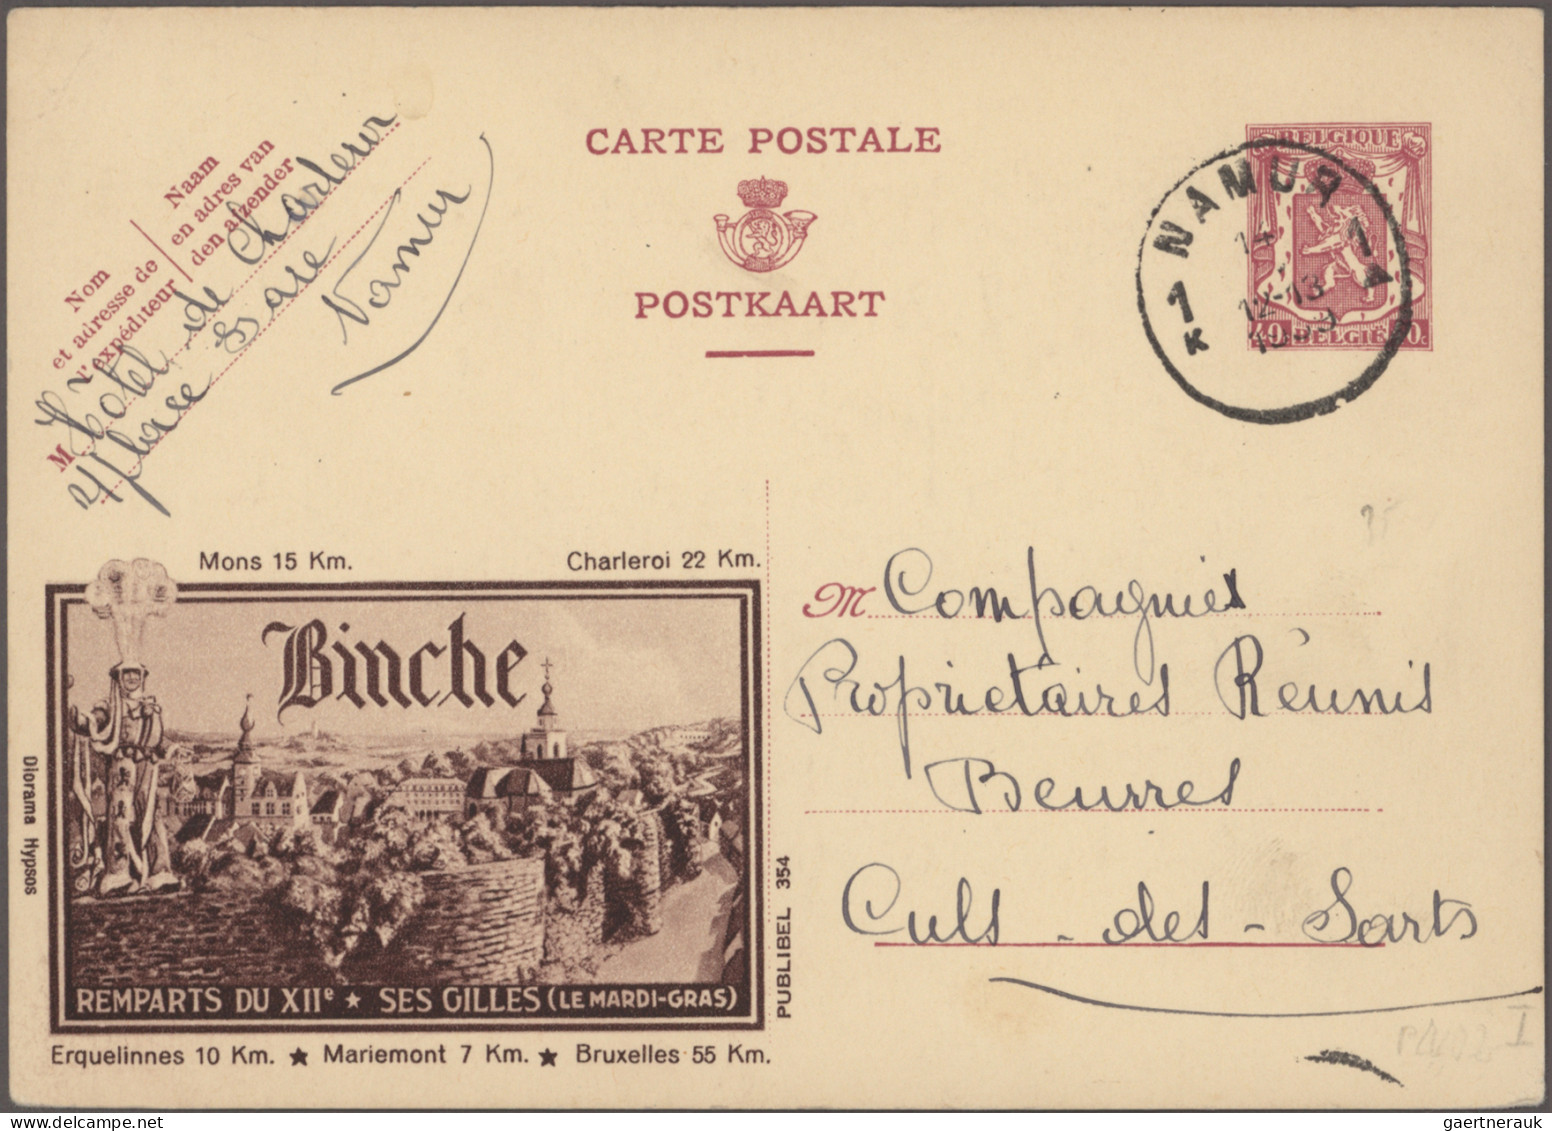 Belgium - postal stationery: 1933/1963, postal stationery picture postcards - pu